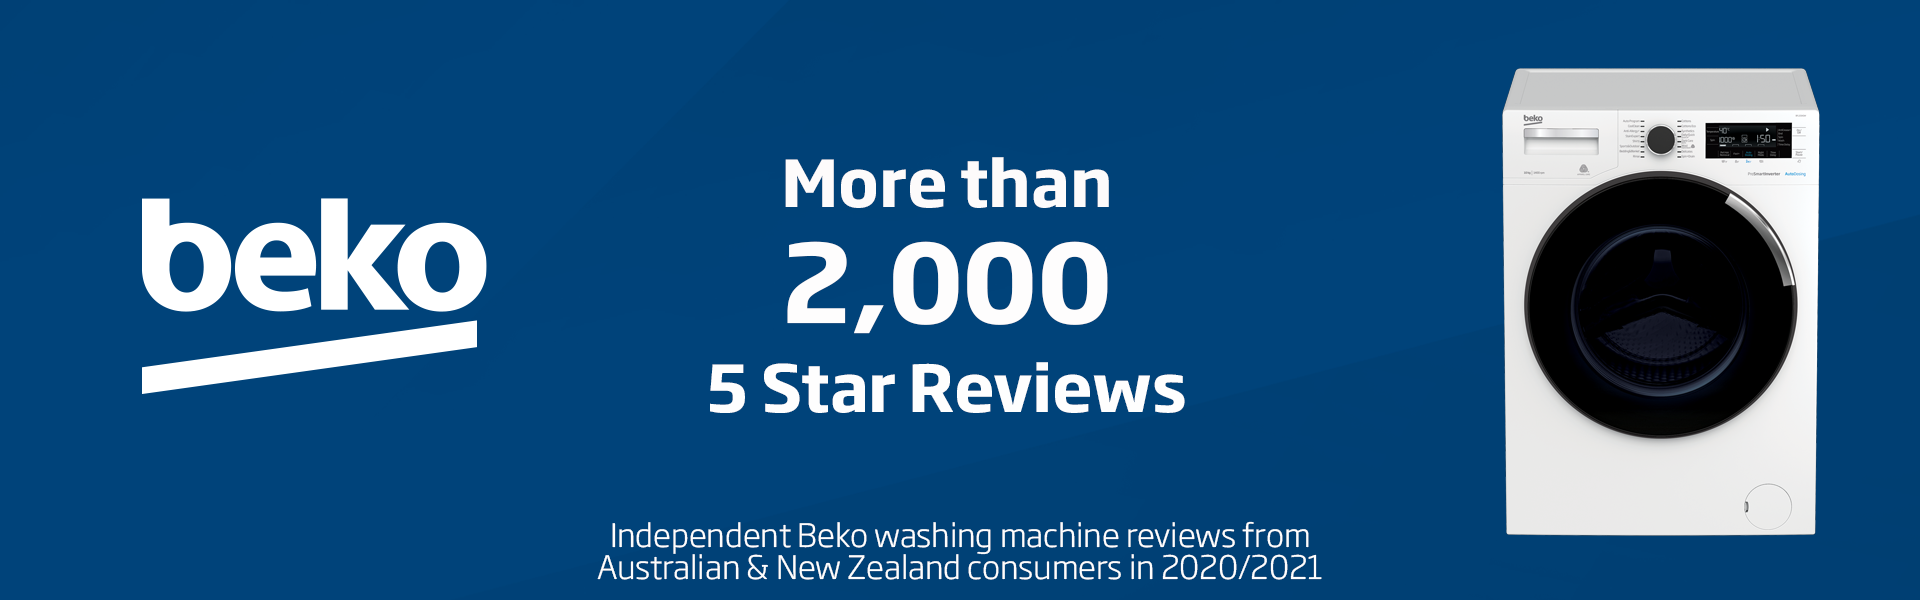 Beko Home Appliances | Beko Australia